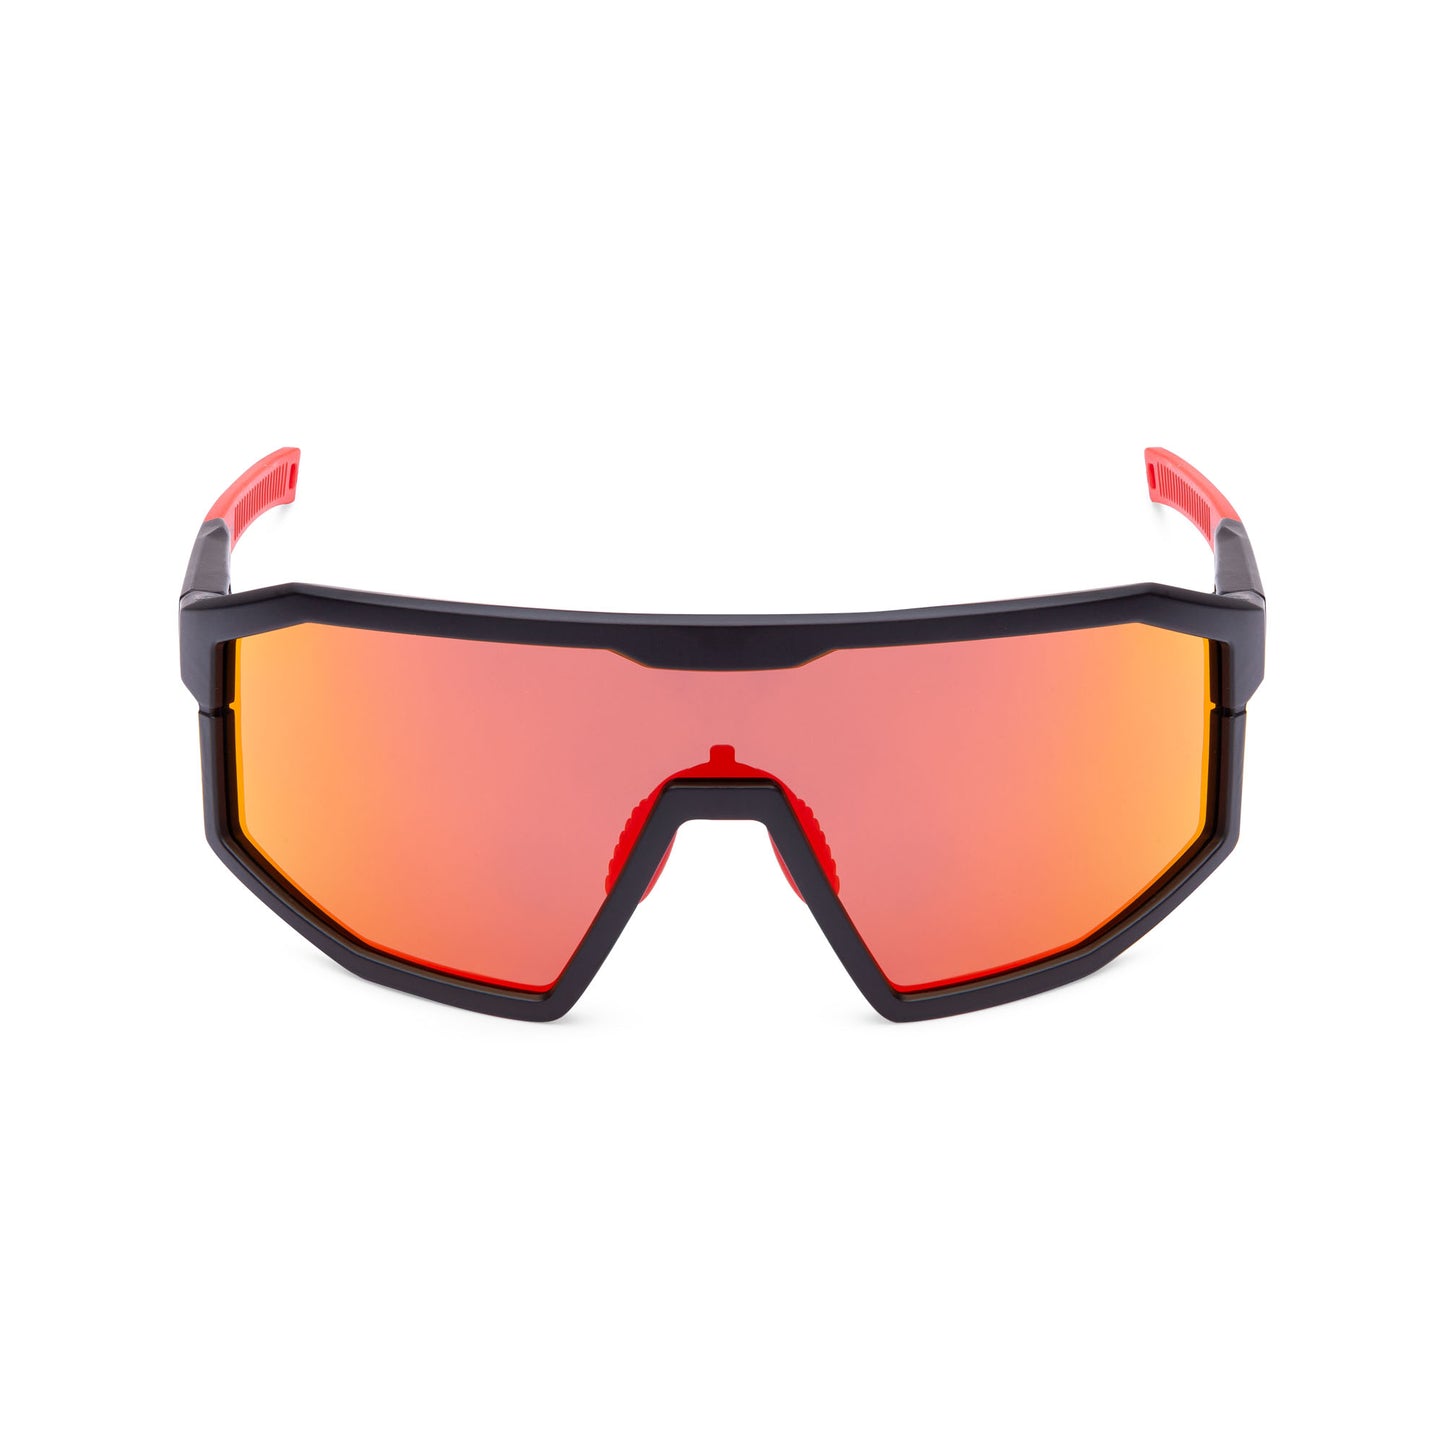 Sky - UV-Proof - Occhiali da Sole Sportivi